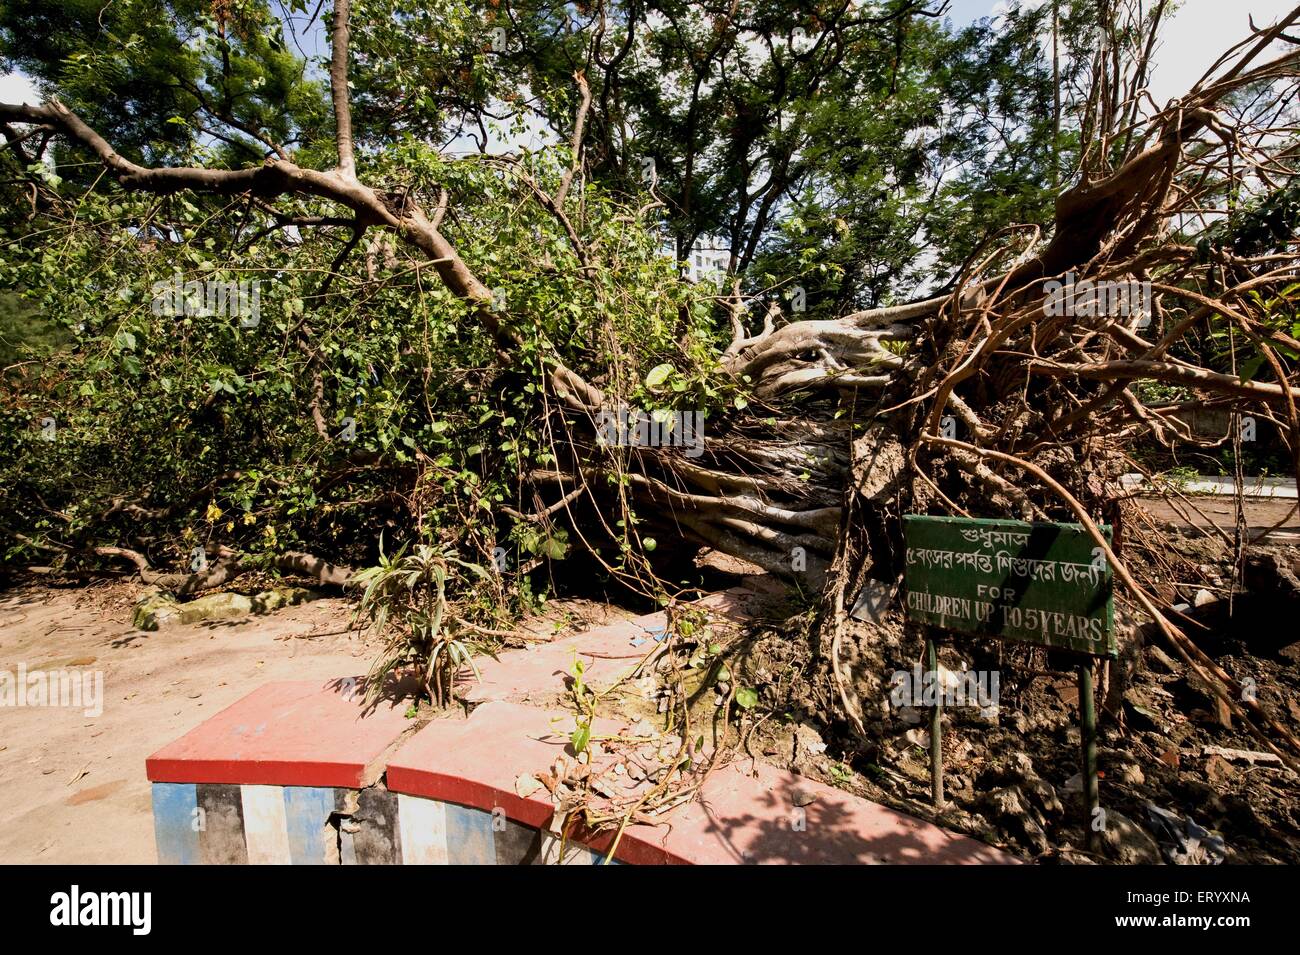 Hurricane damage, typhoon storm, cyclone uprooted trees, Ballygunge, Calcutta, Kolkata, West Bengal, India, Asia Stock Photo